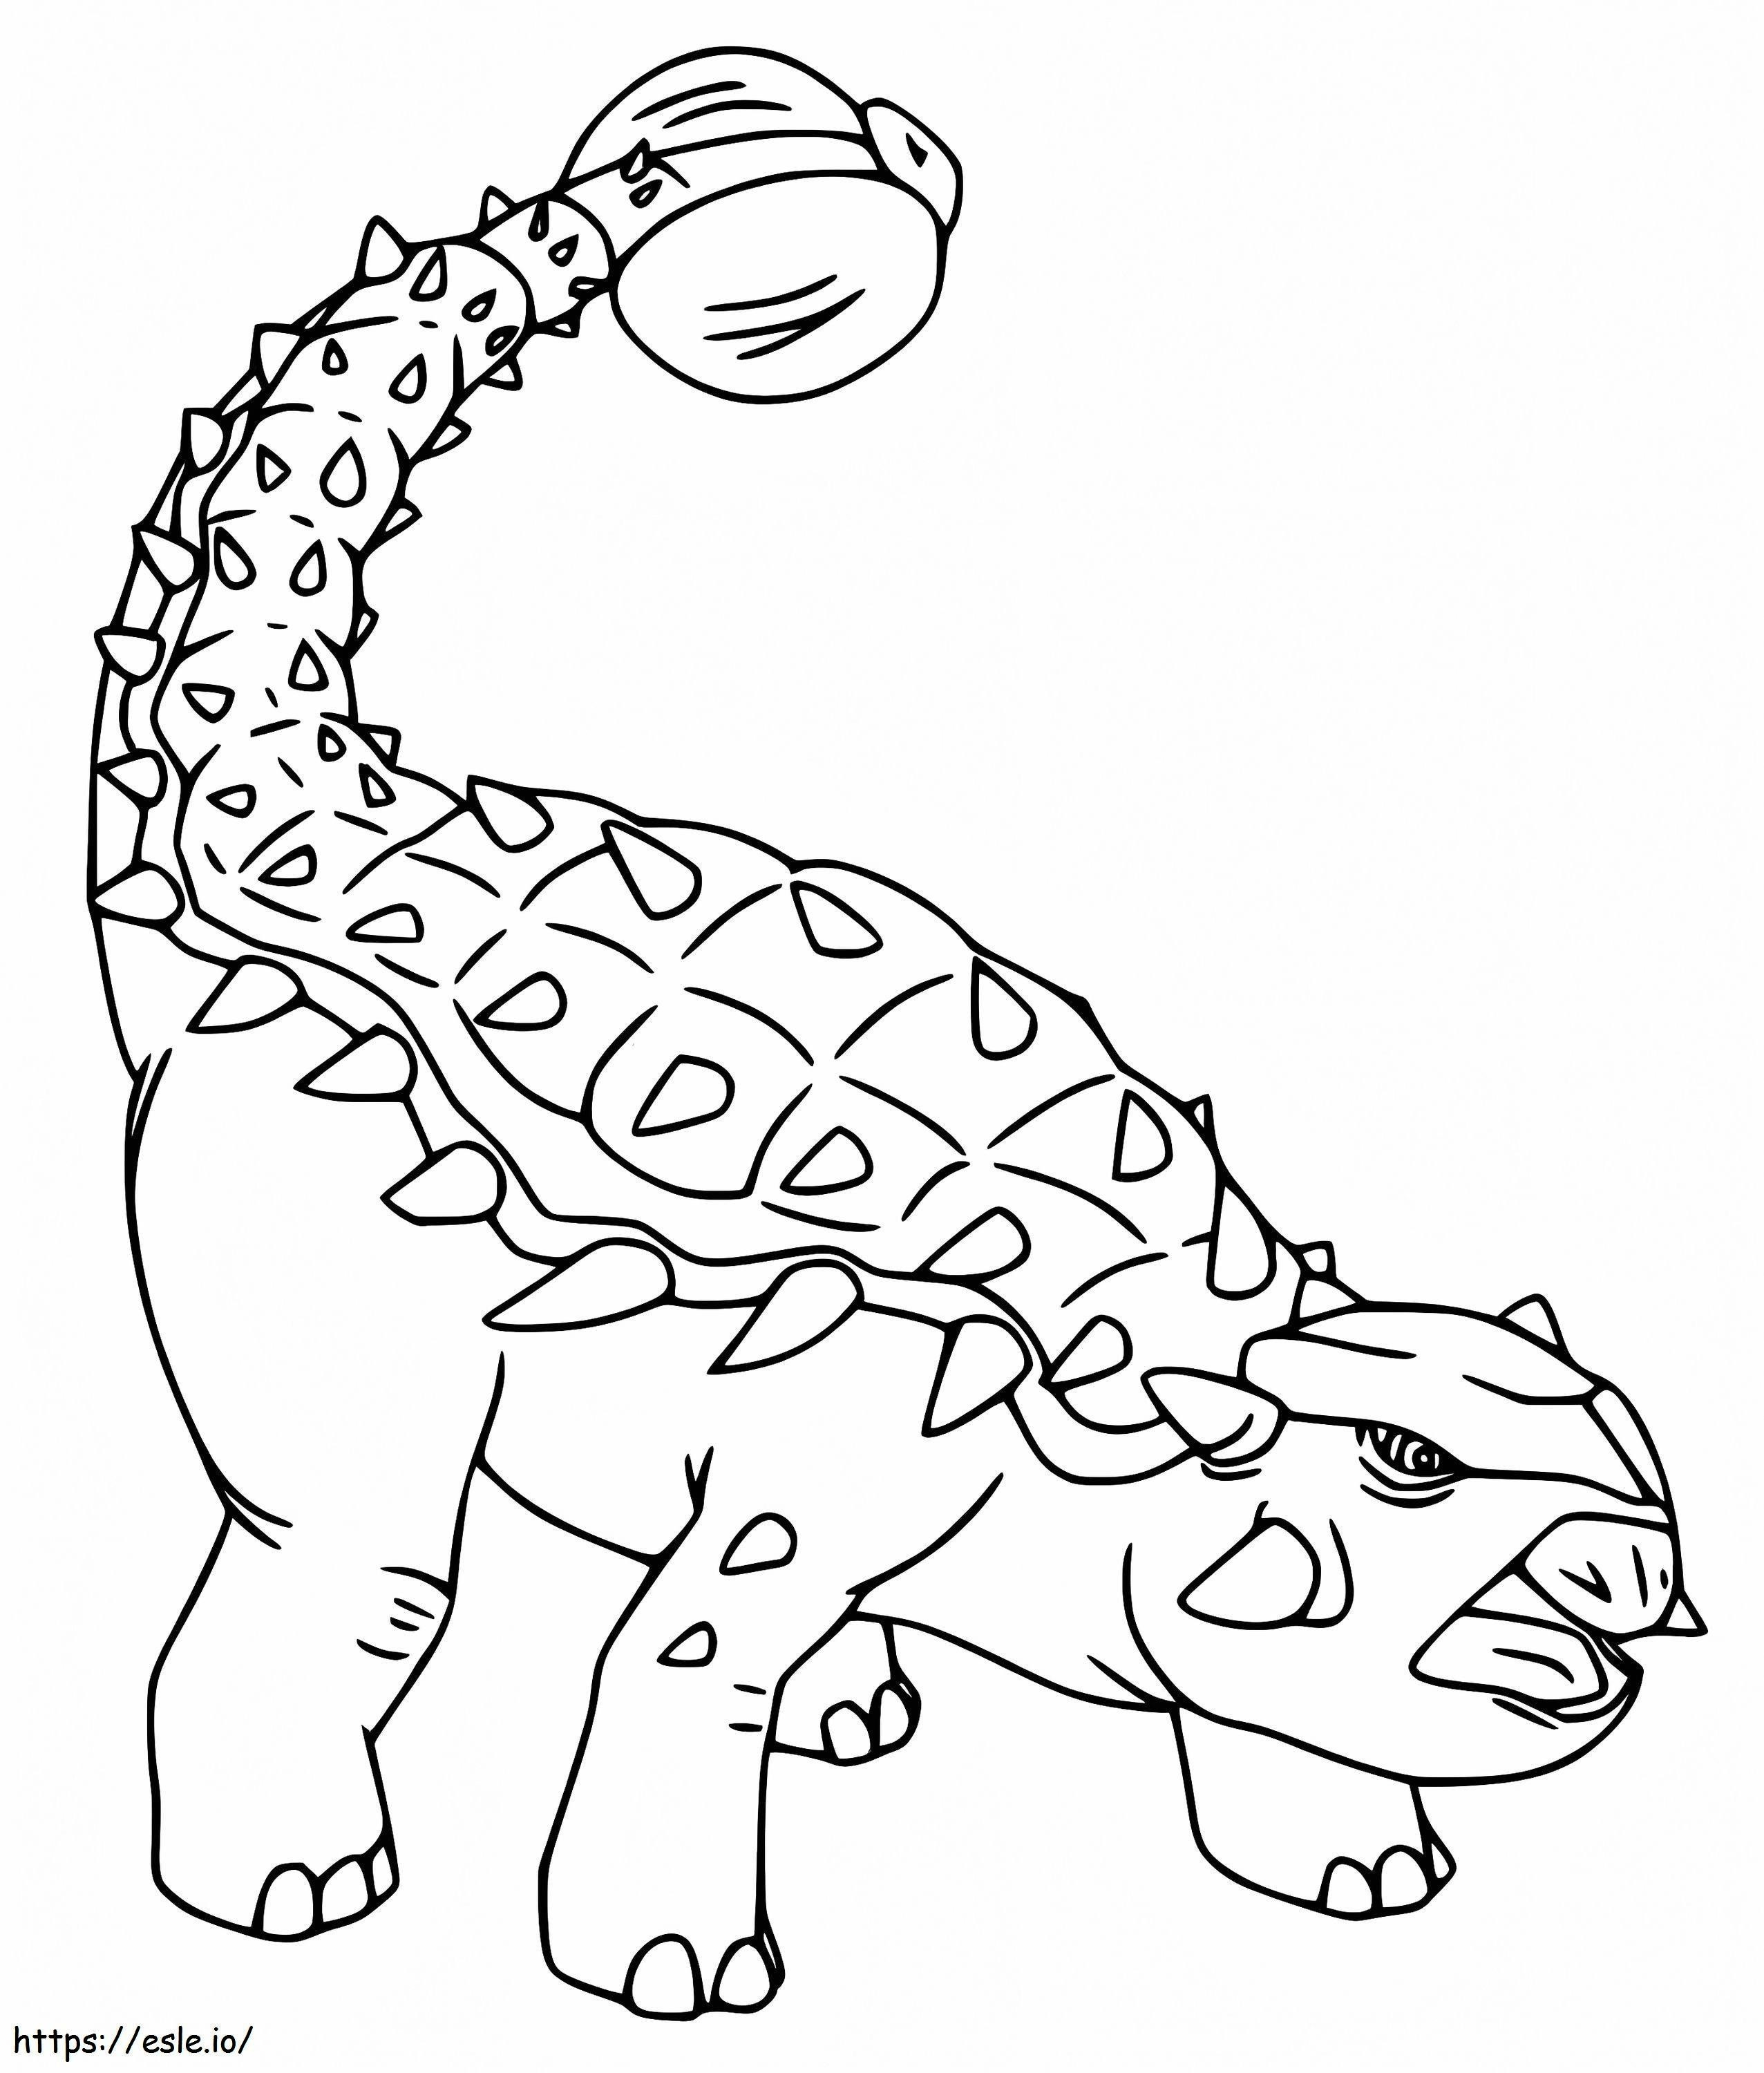 Anquilosaurio enojado para colorear